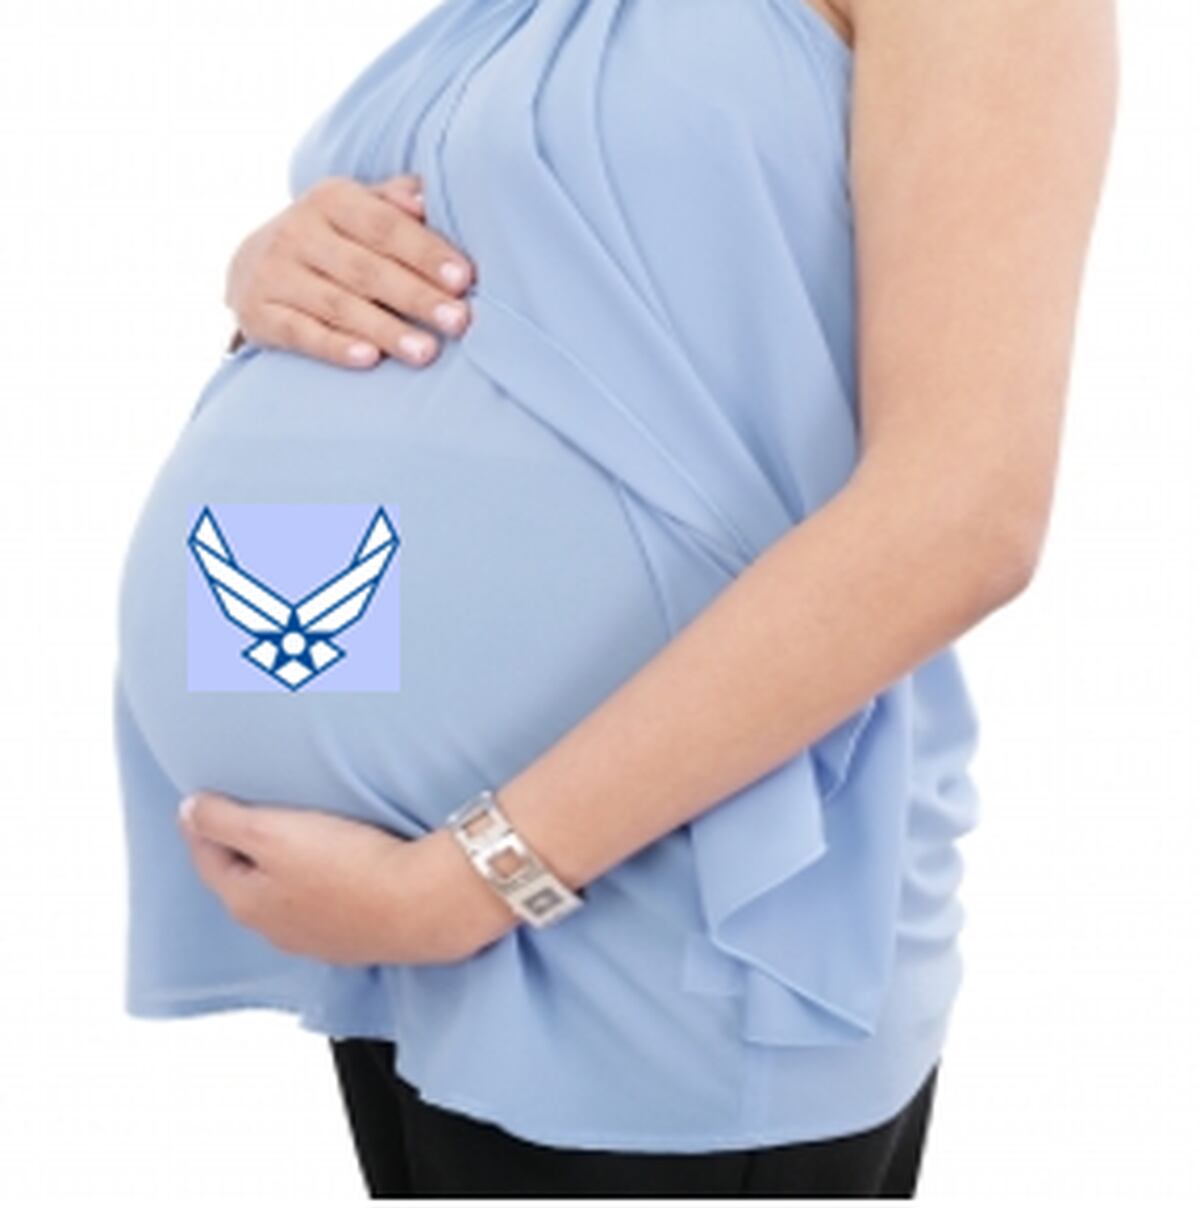 Air Force considering longer maternity leave